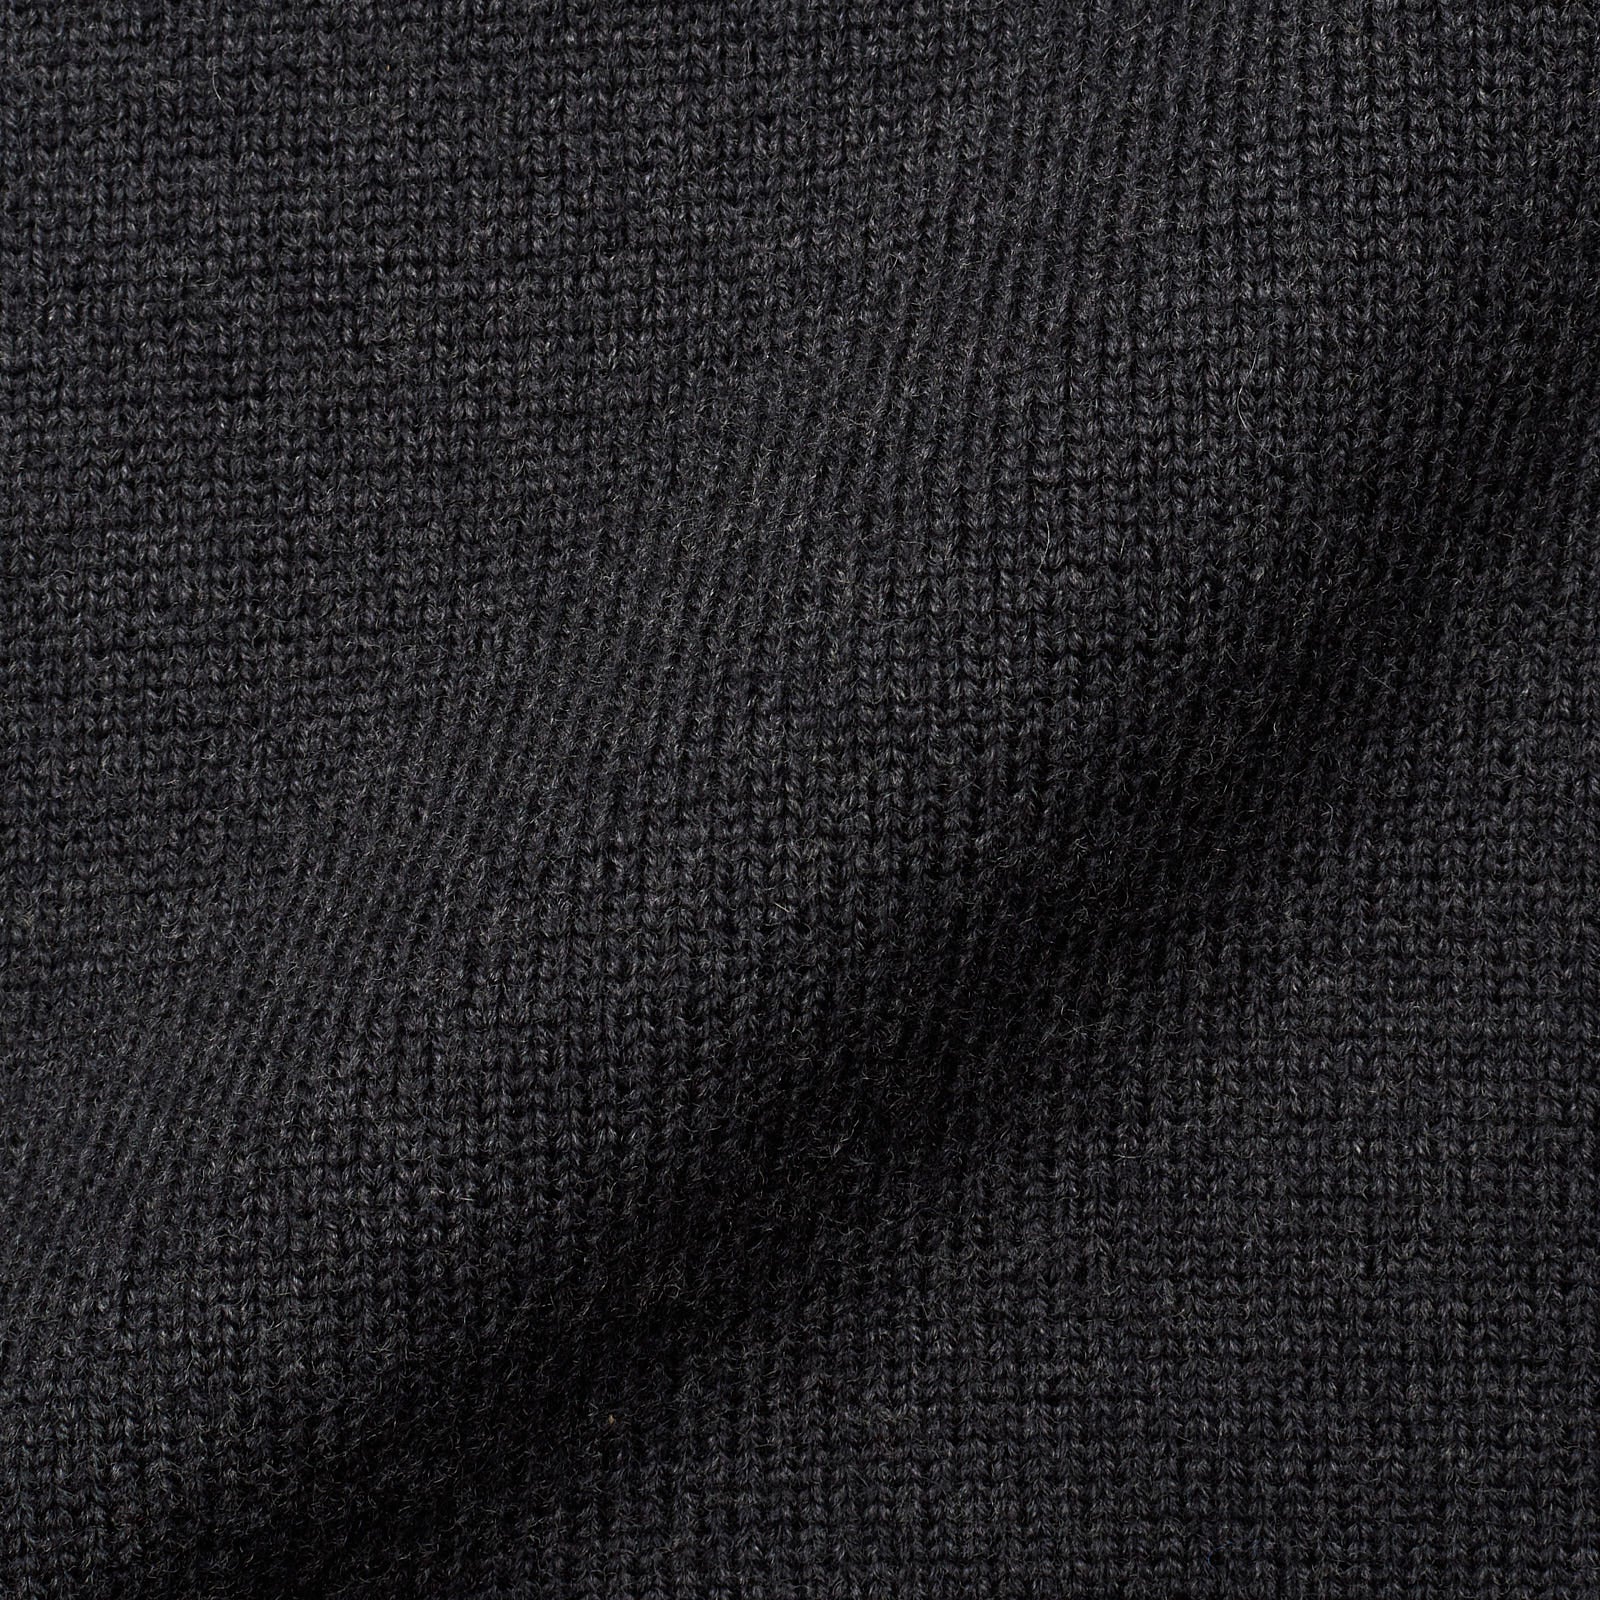 FEAR OF GOD Gray Virgin Wool Knit Crewneck Sweater NEW Size L FEAR OF GOD